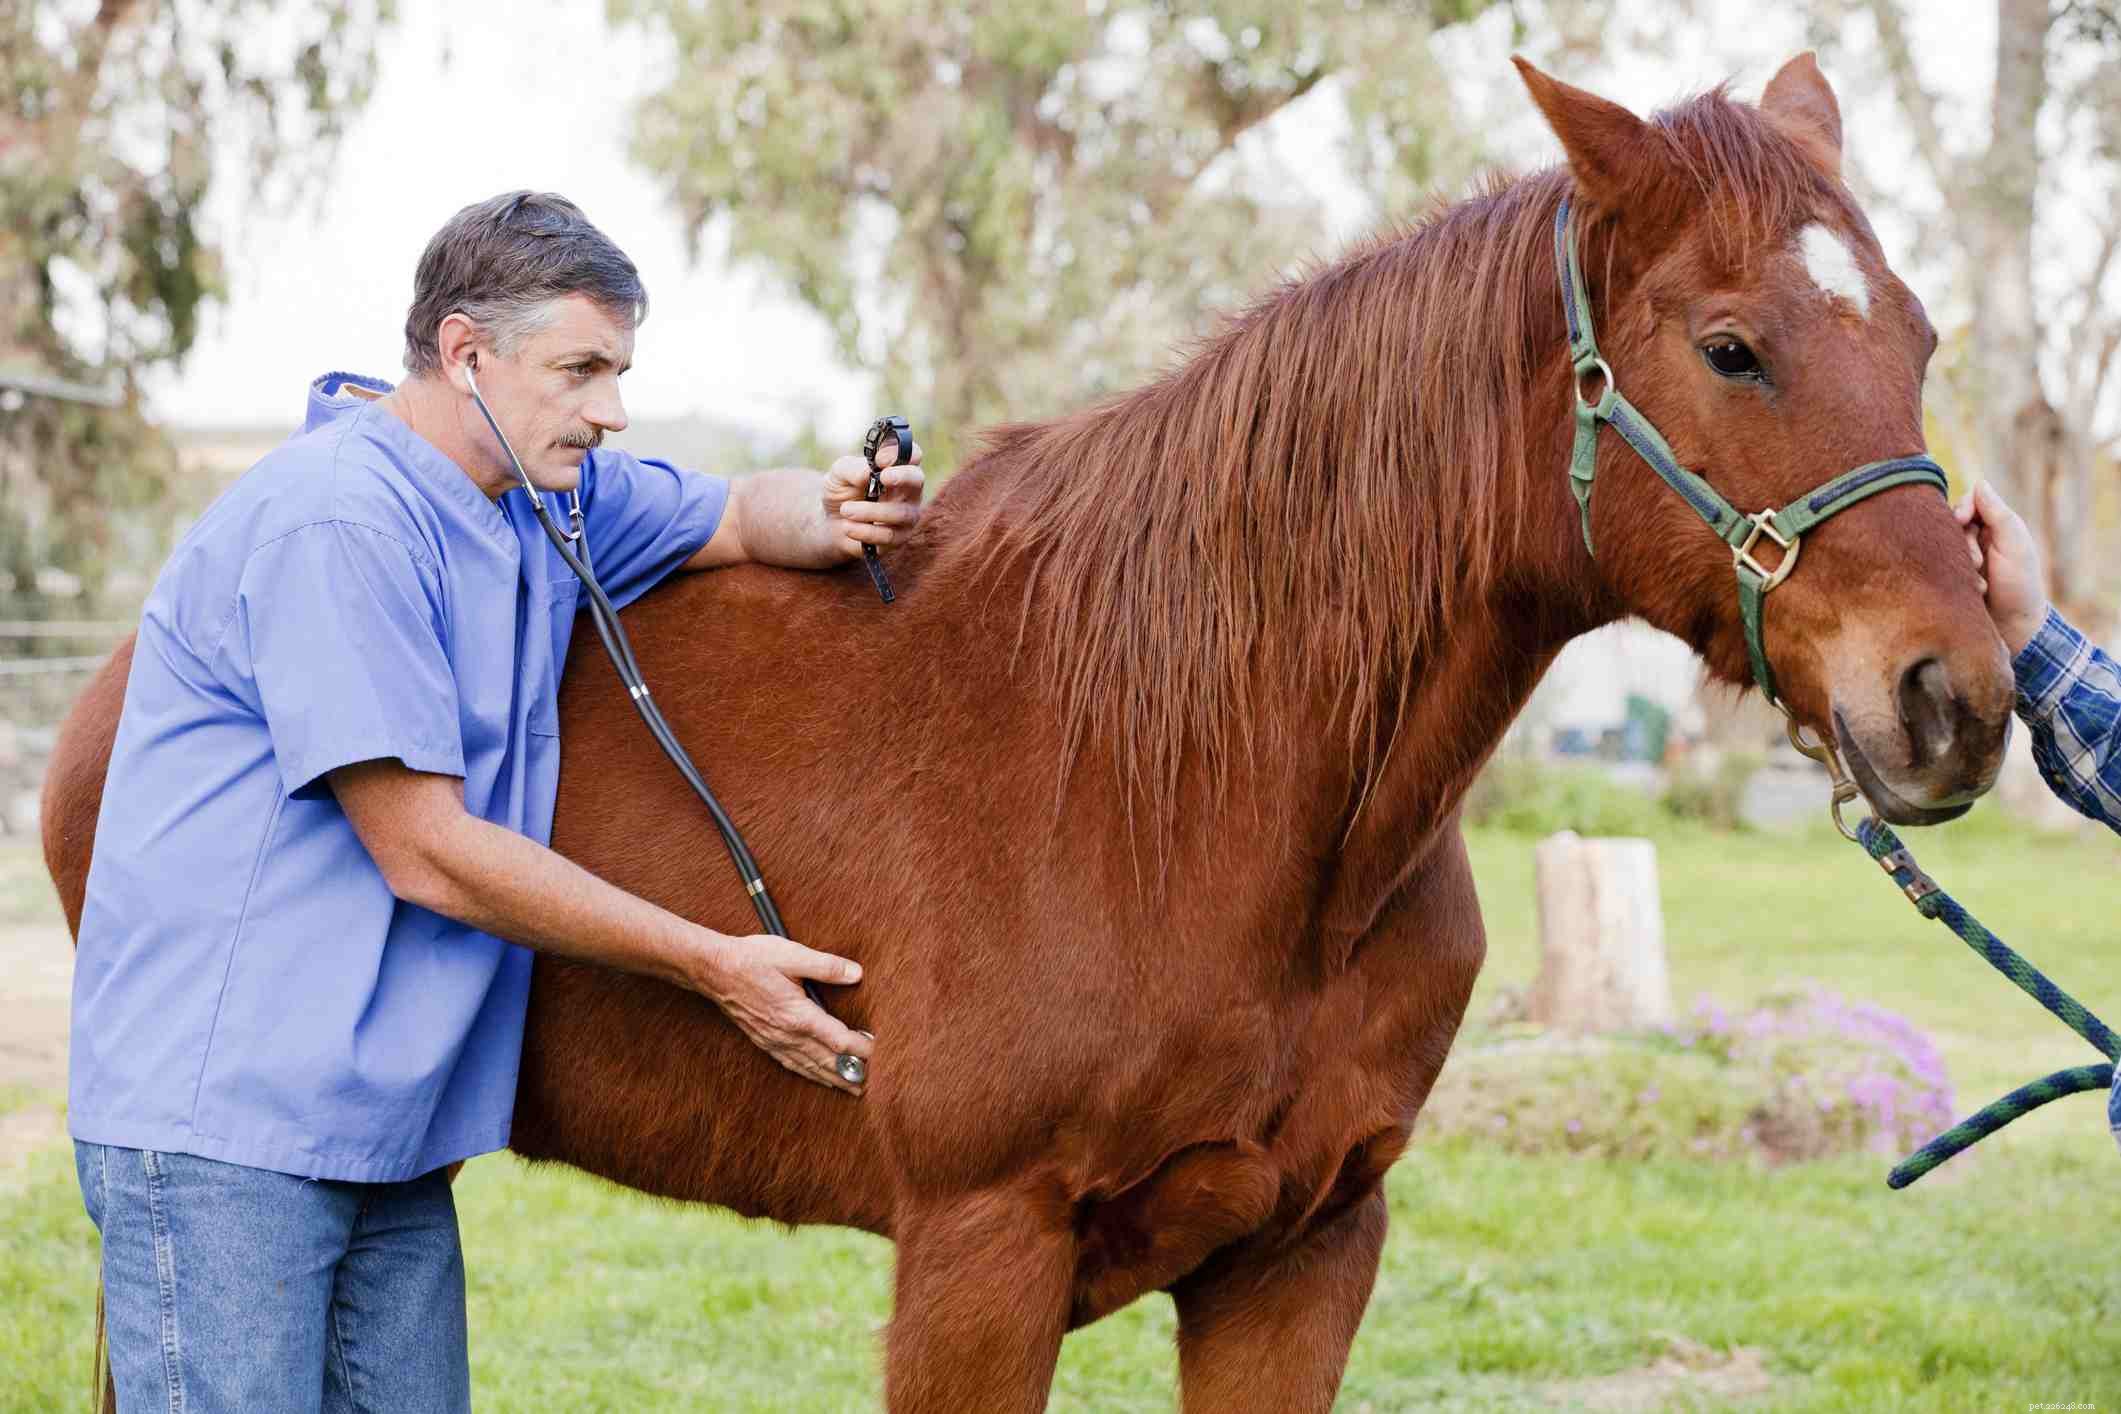 Horse Care 101